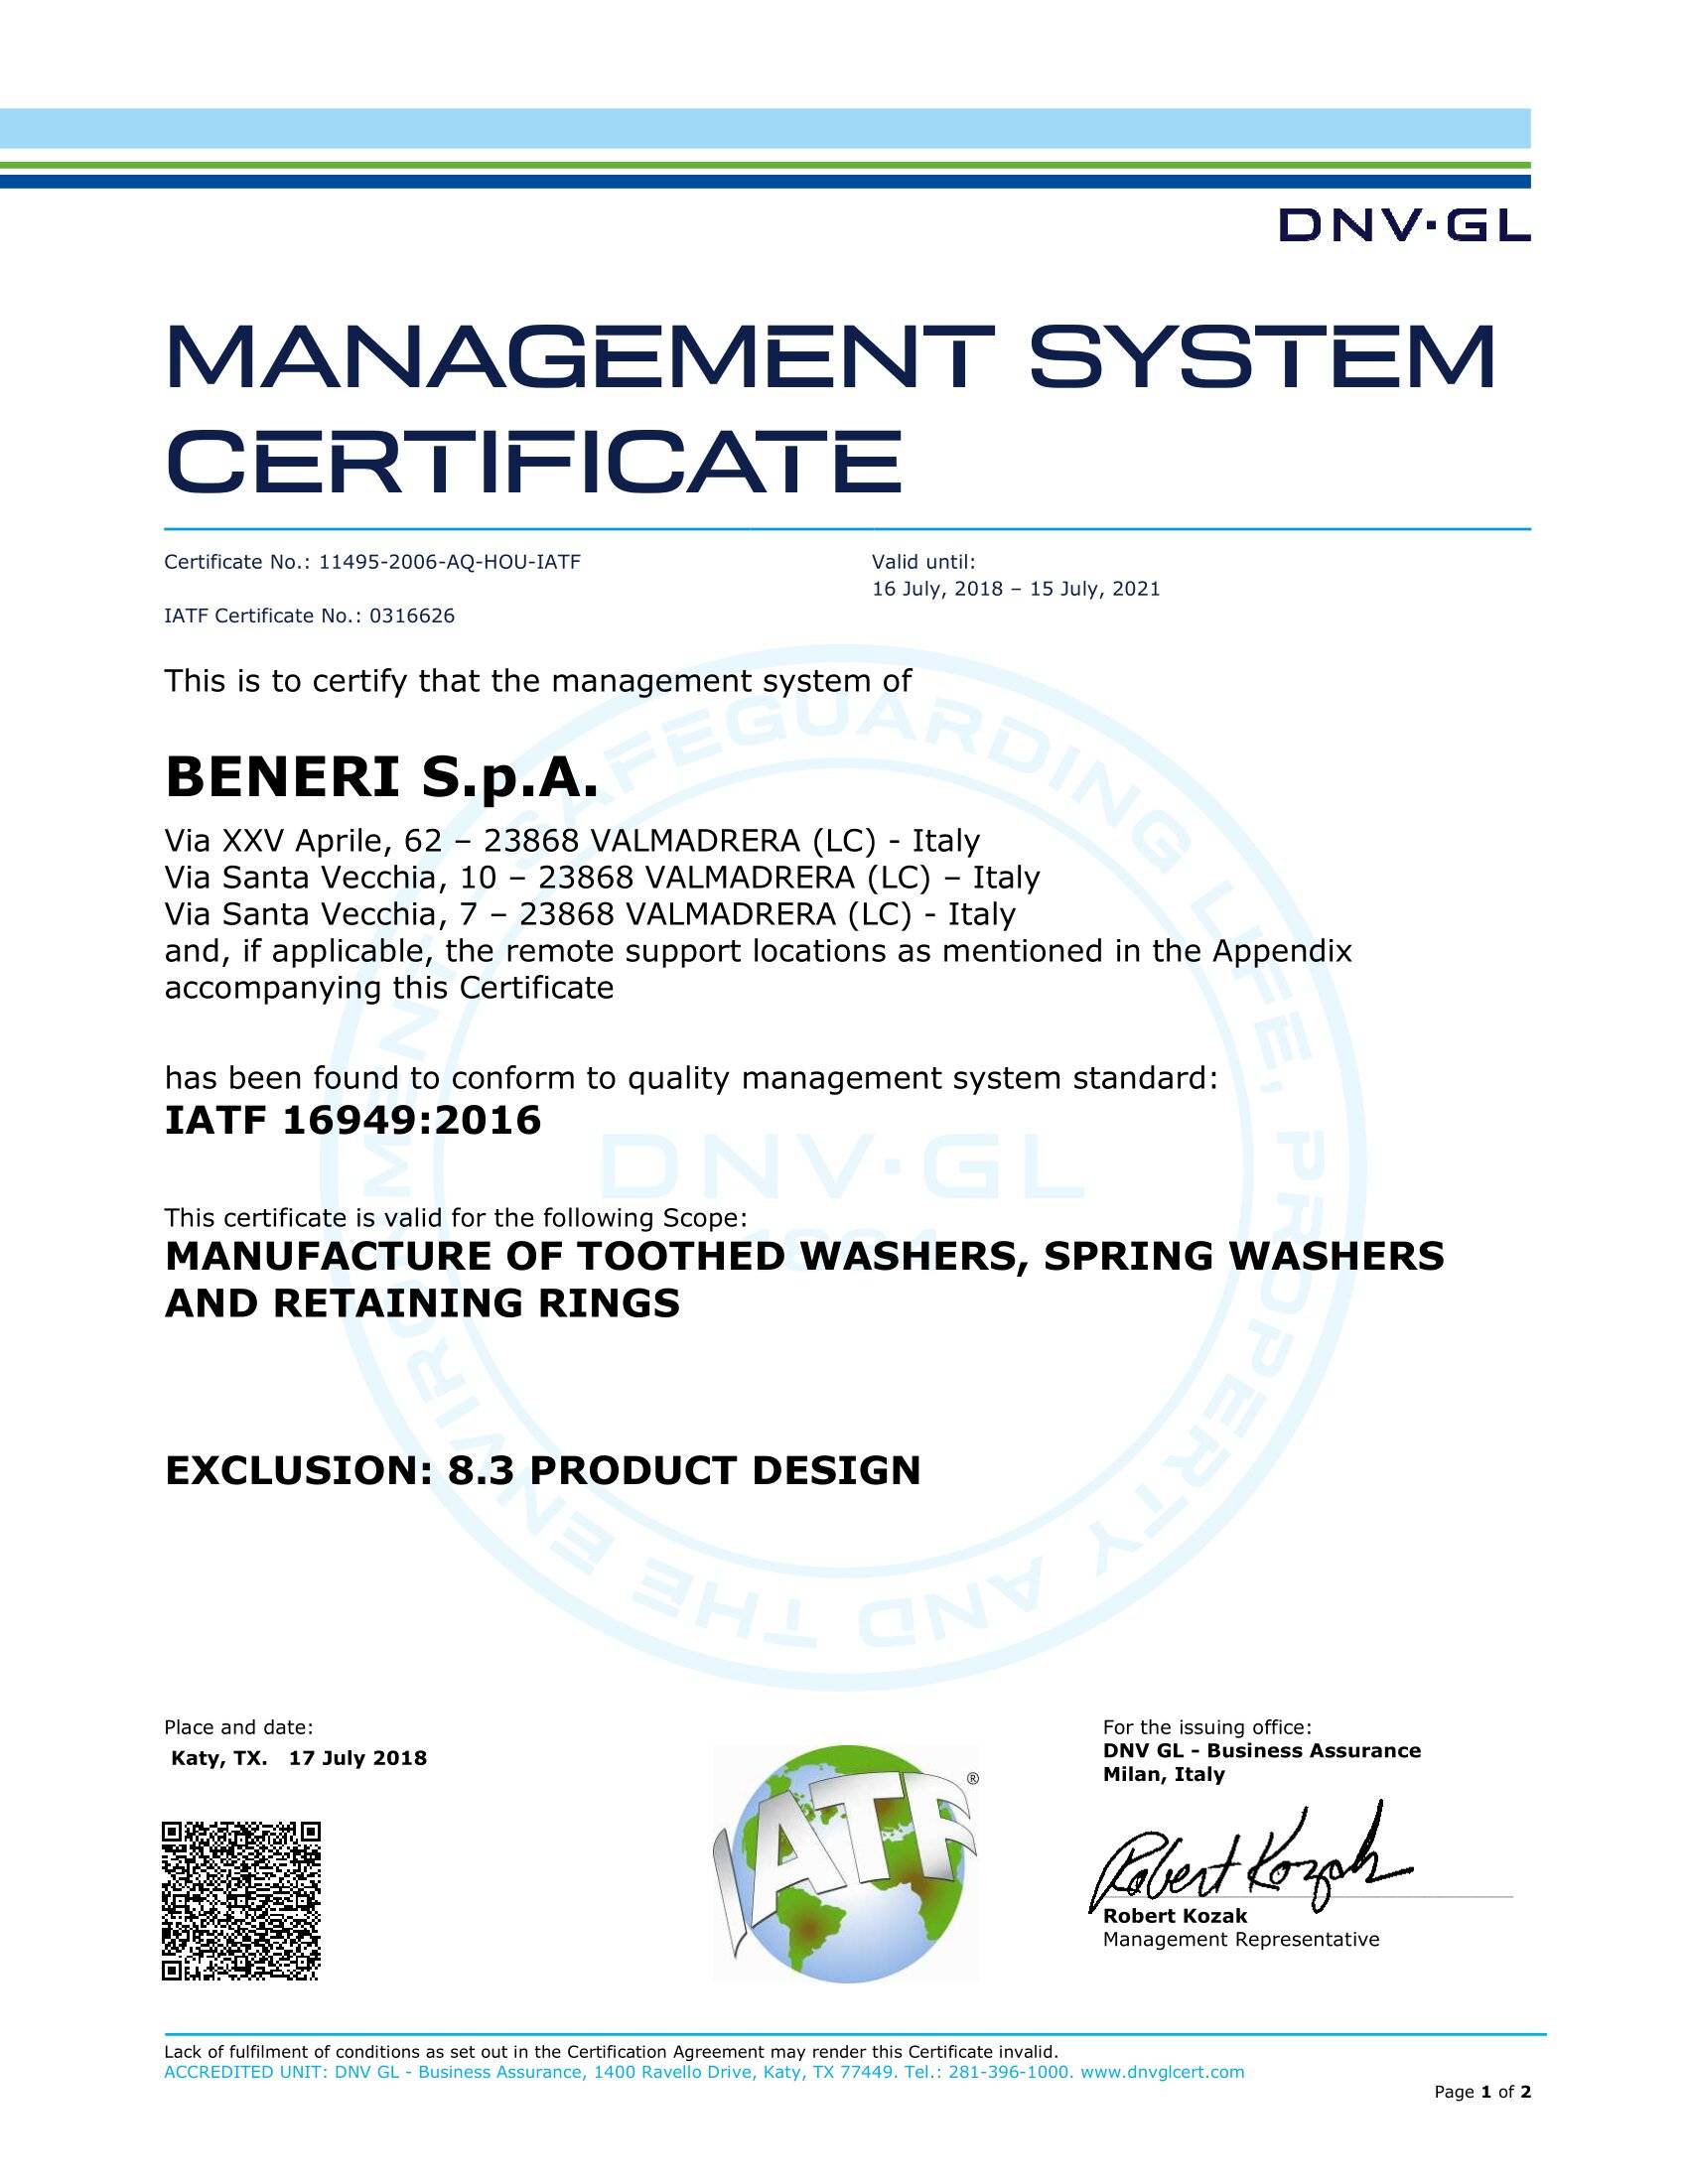 BENERI Spa obtains IATF 16949:2016 certification: Immagine 1